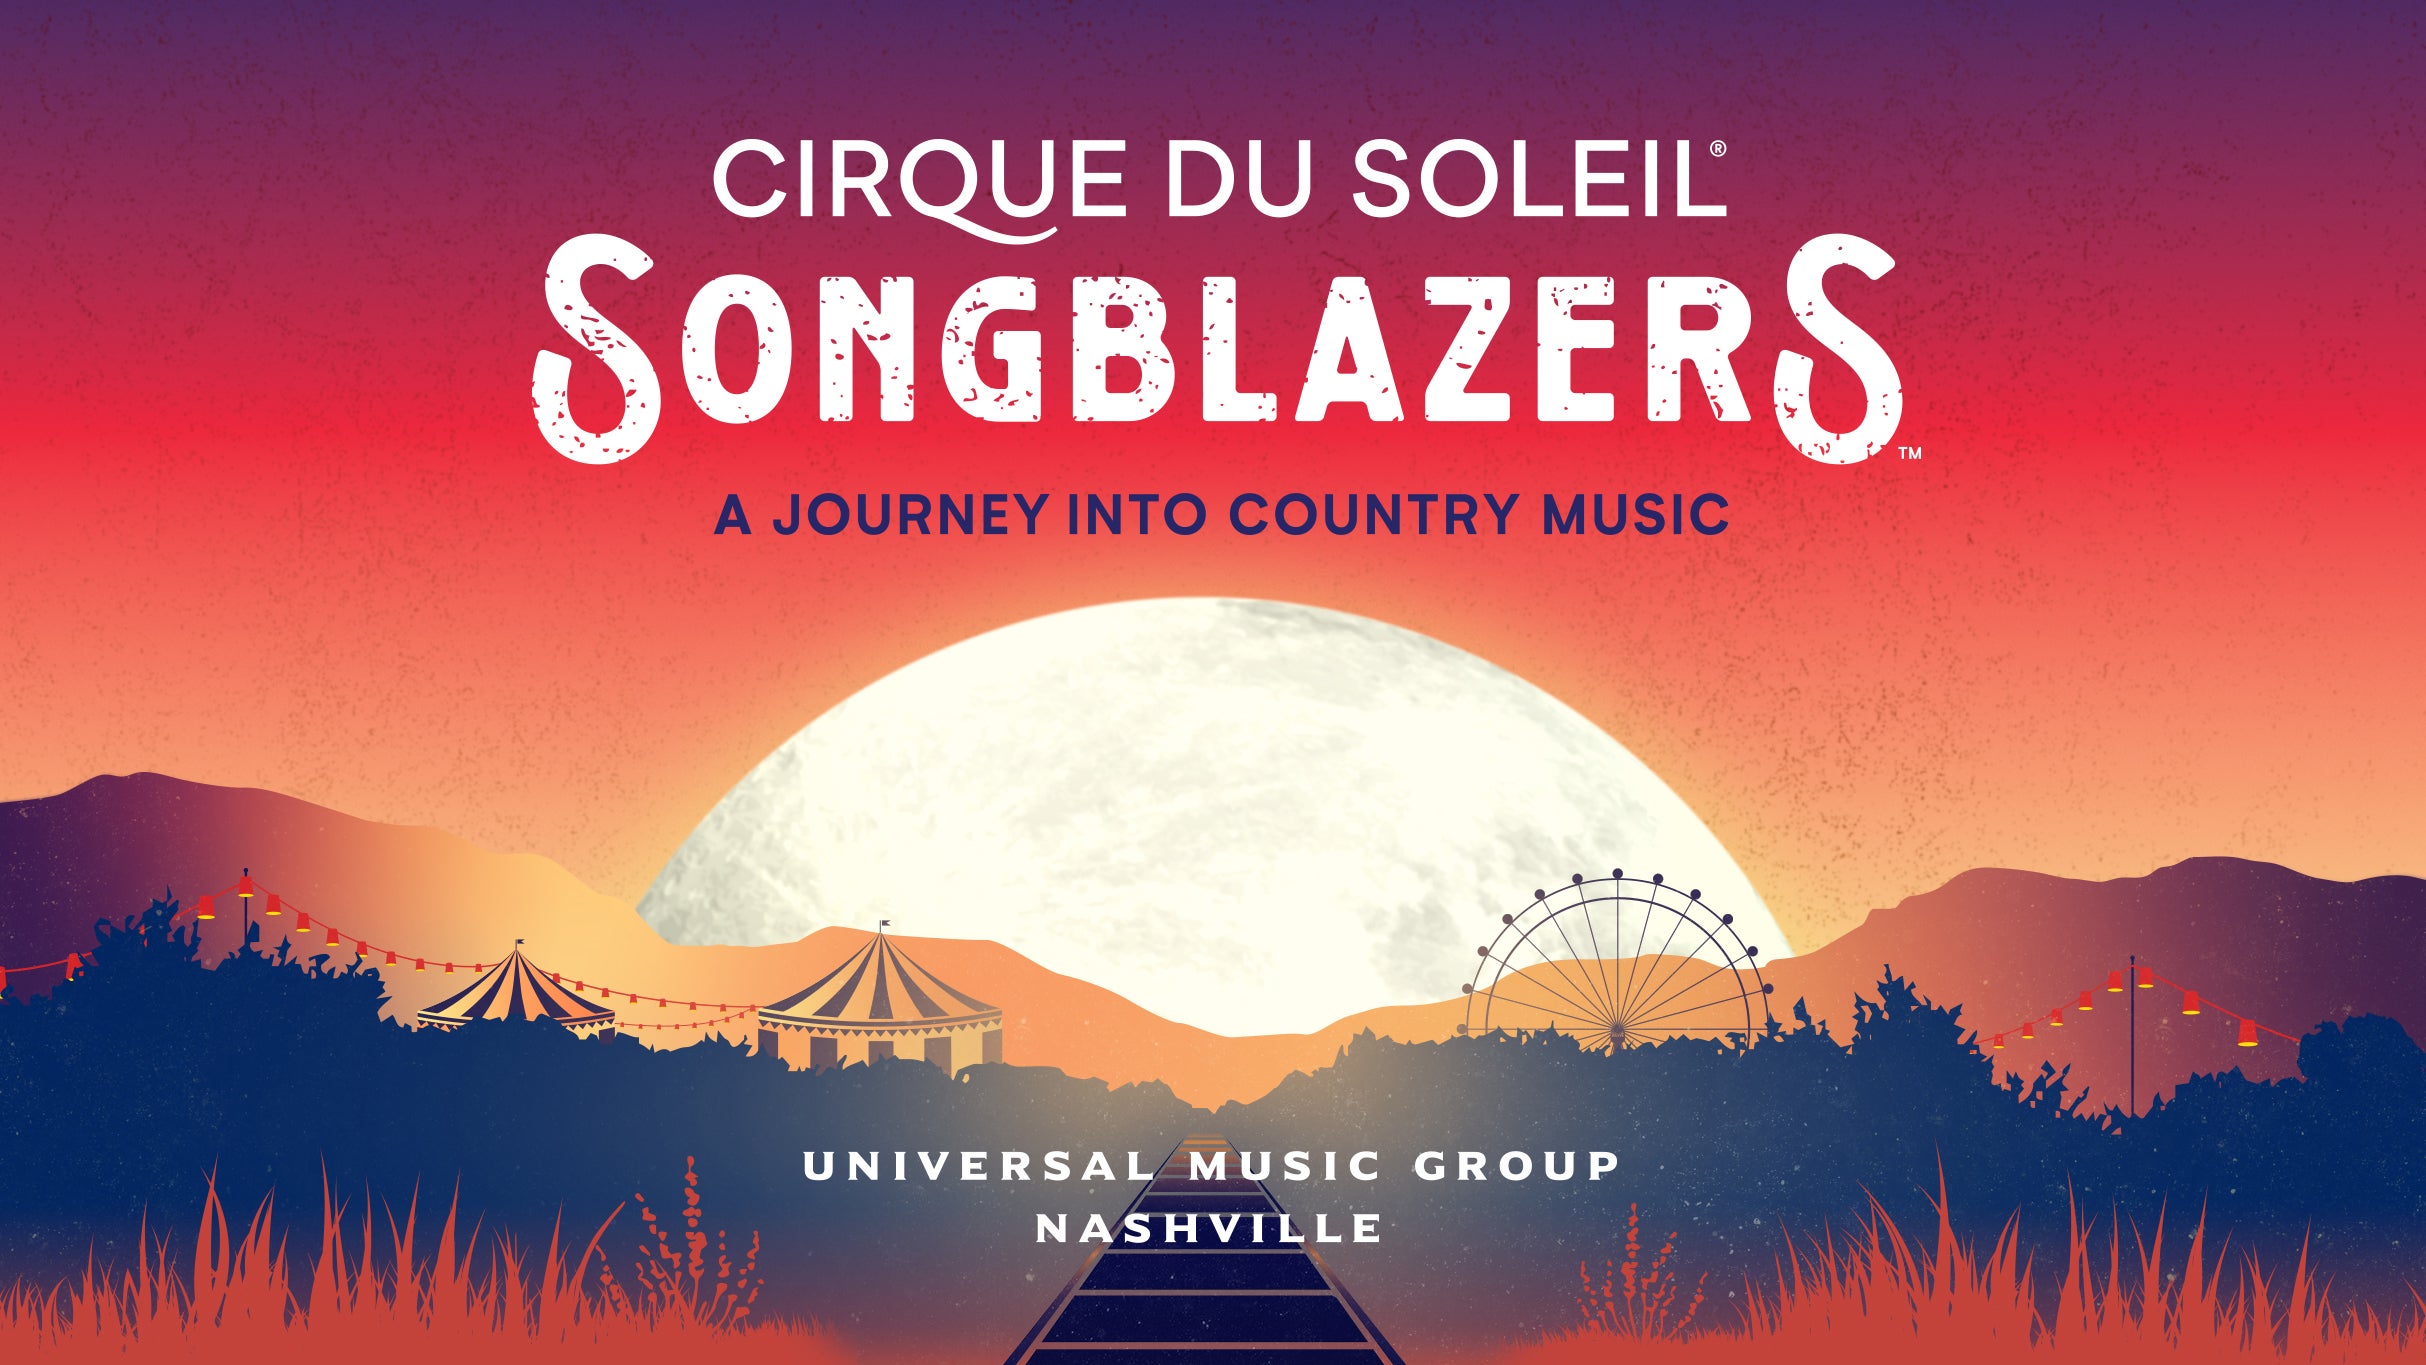 Cirque du Soleil: Songblazers presale passwords